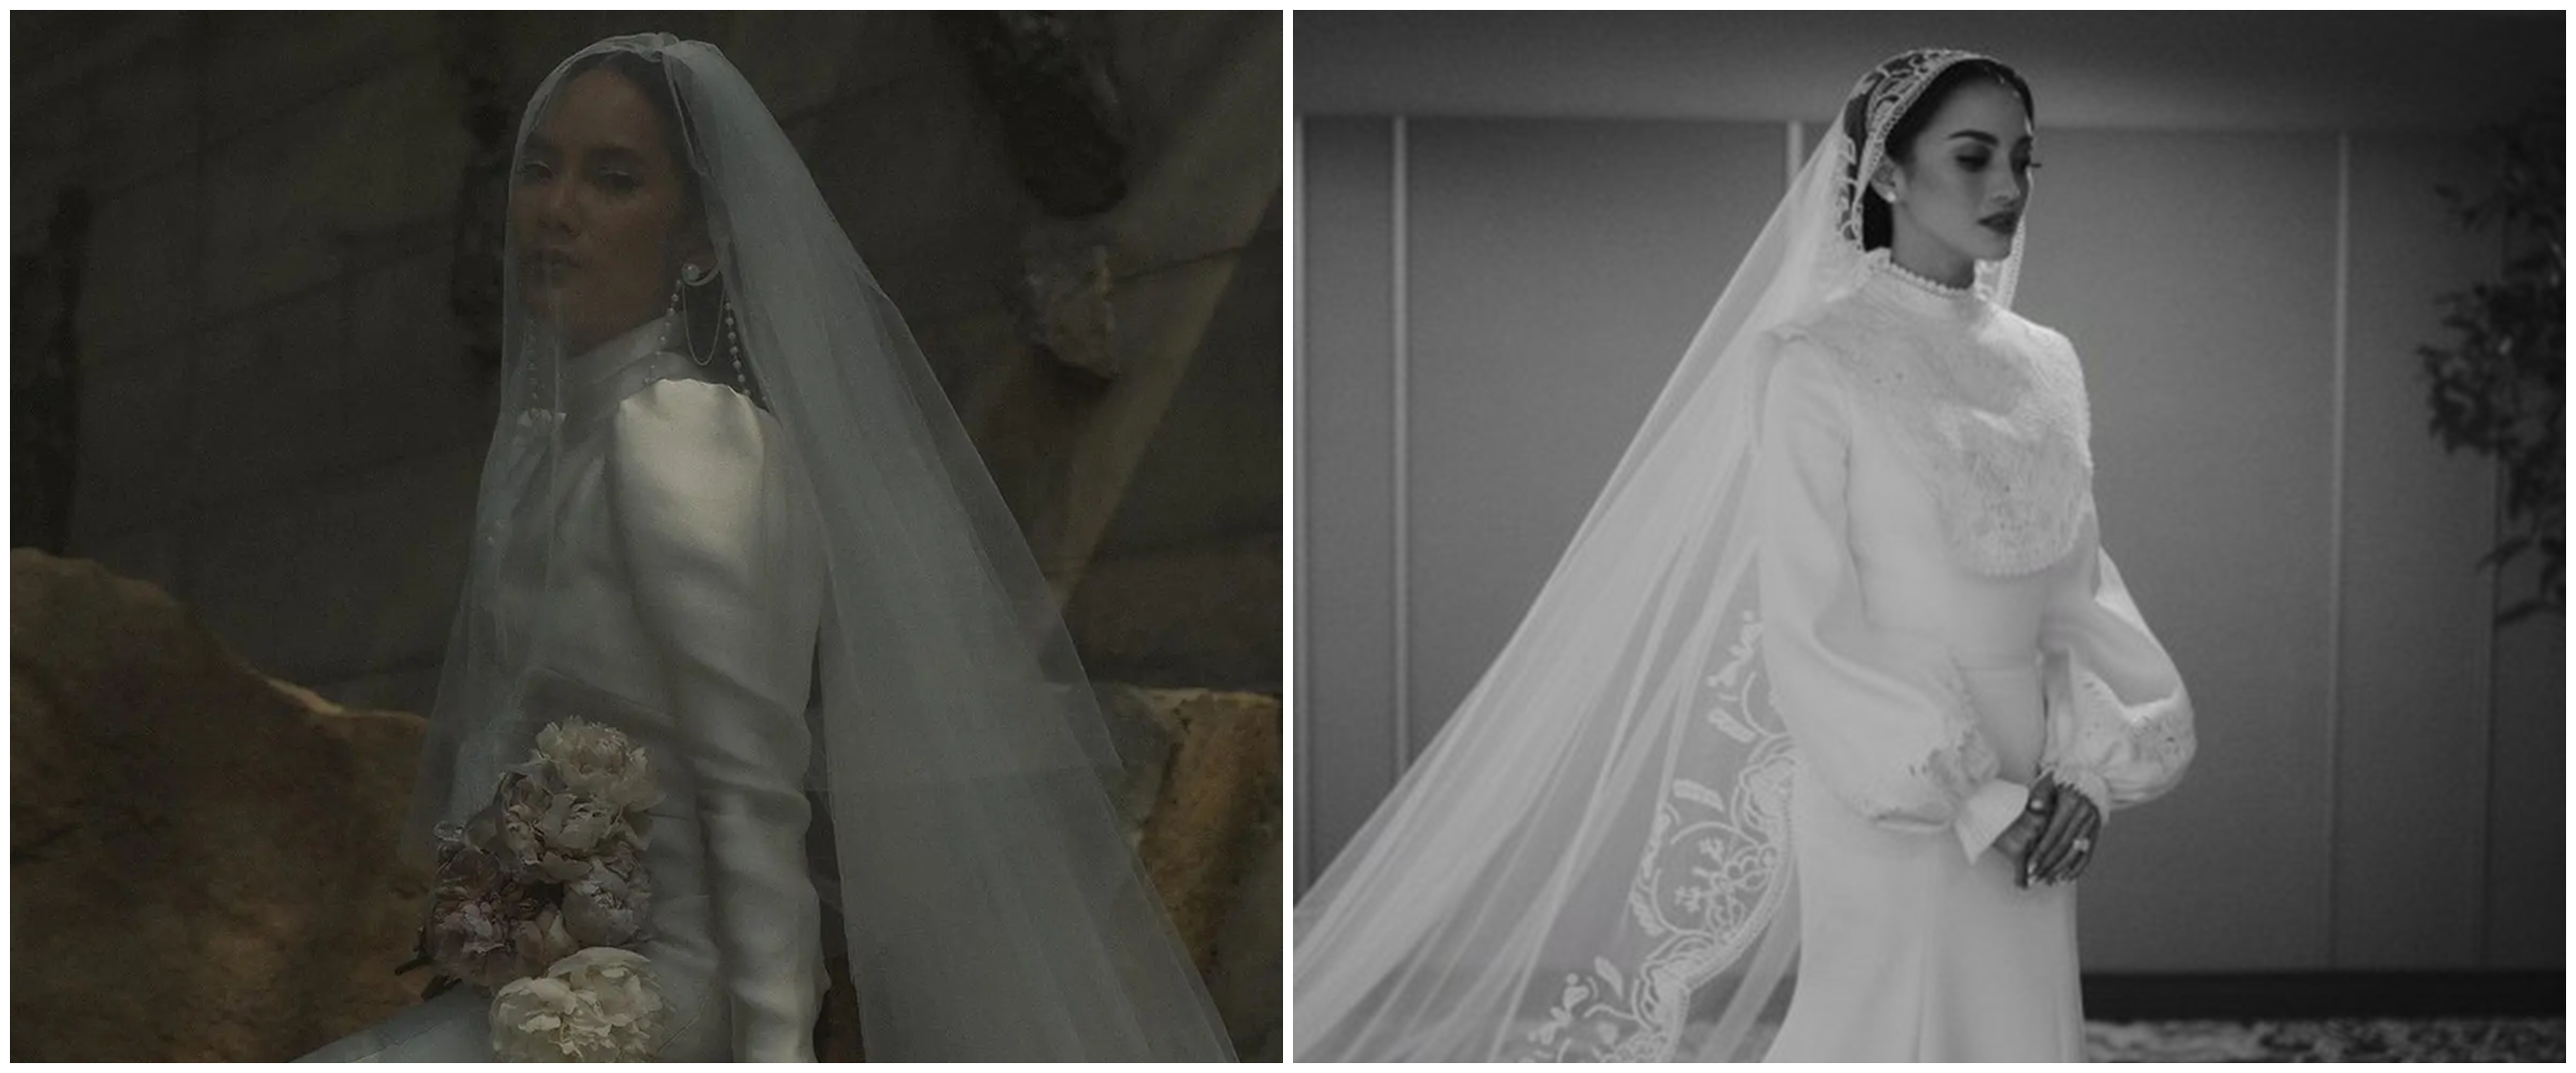 Gaya 9 seleb pakai gaun pengantin tertutup tanpa hijab, Jessica Mila tampil anggun bak royal wedding